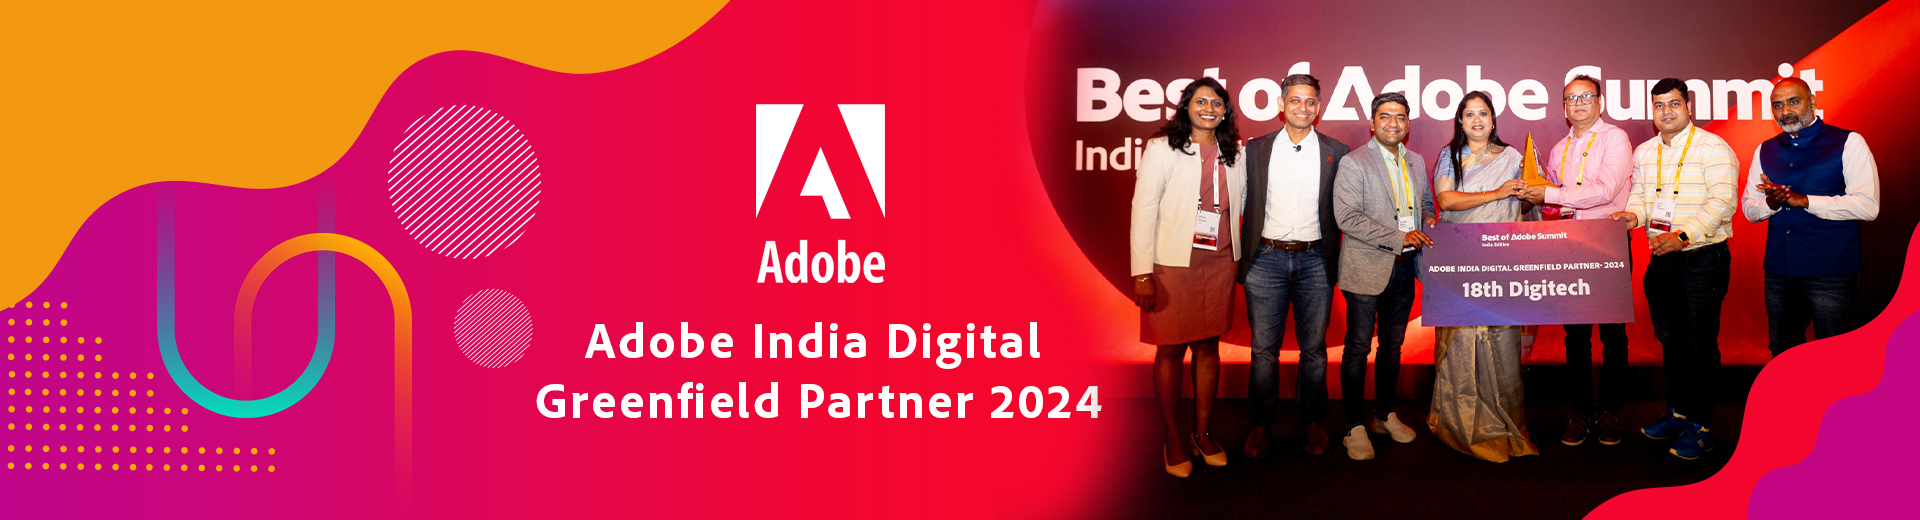 Adobe India Digital Greenfield Partner 2024